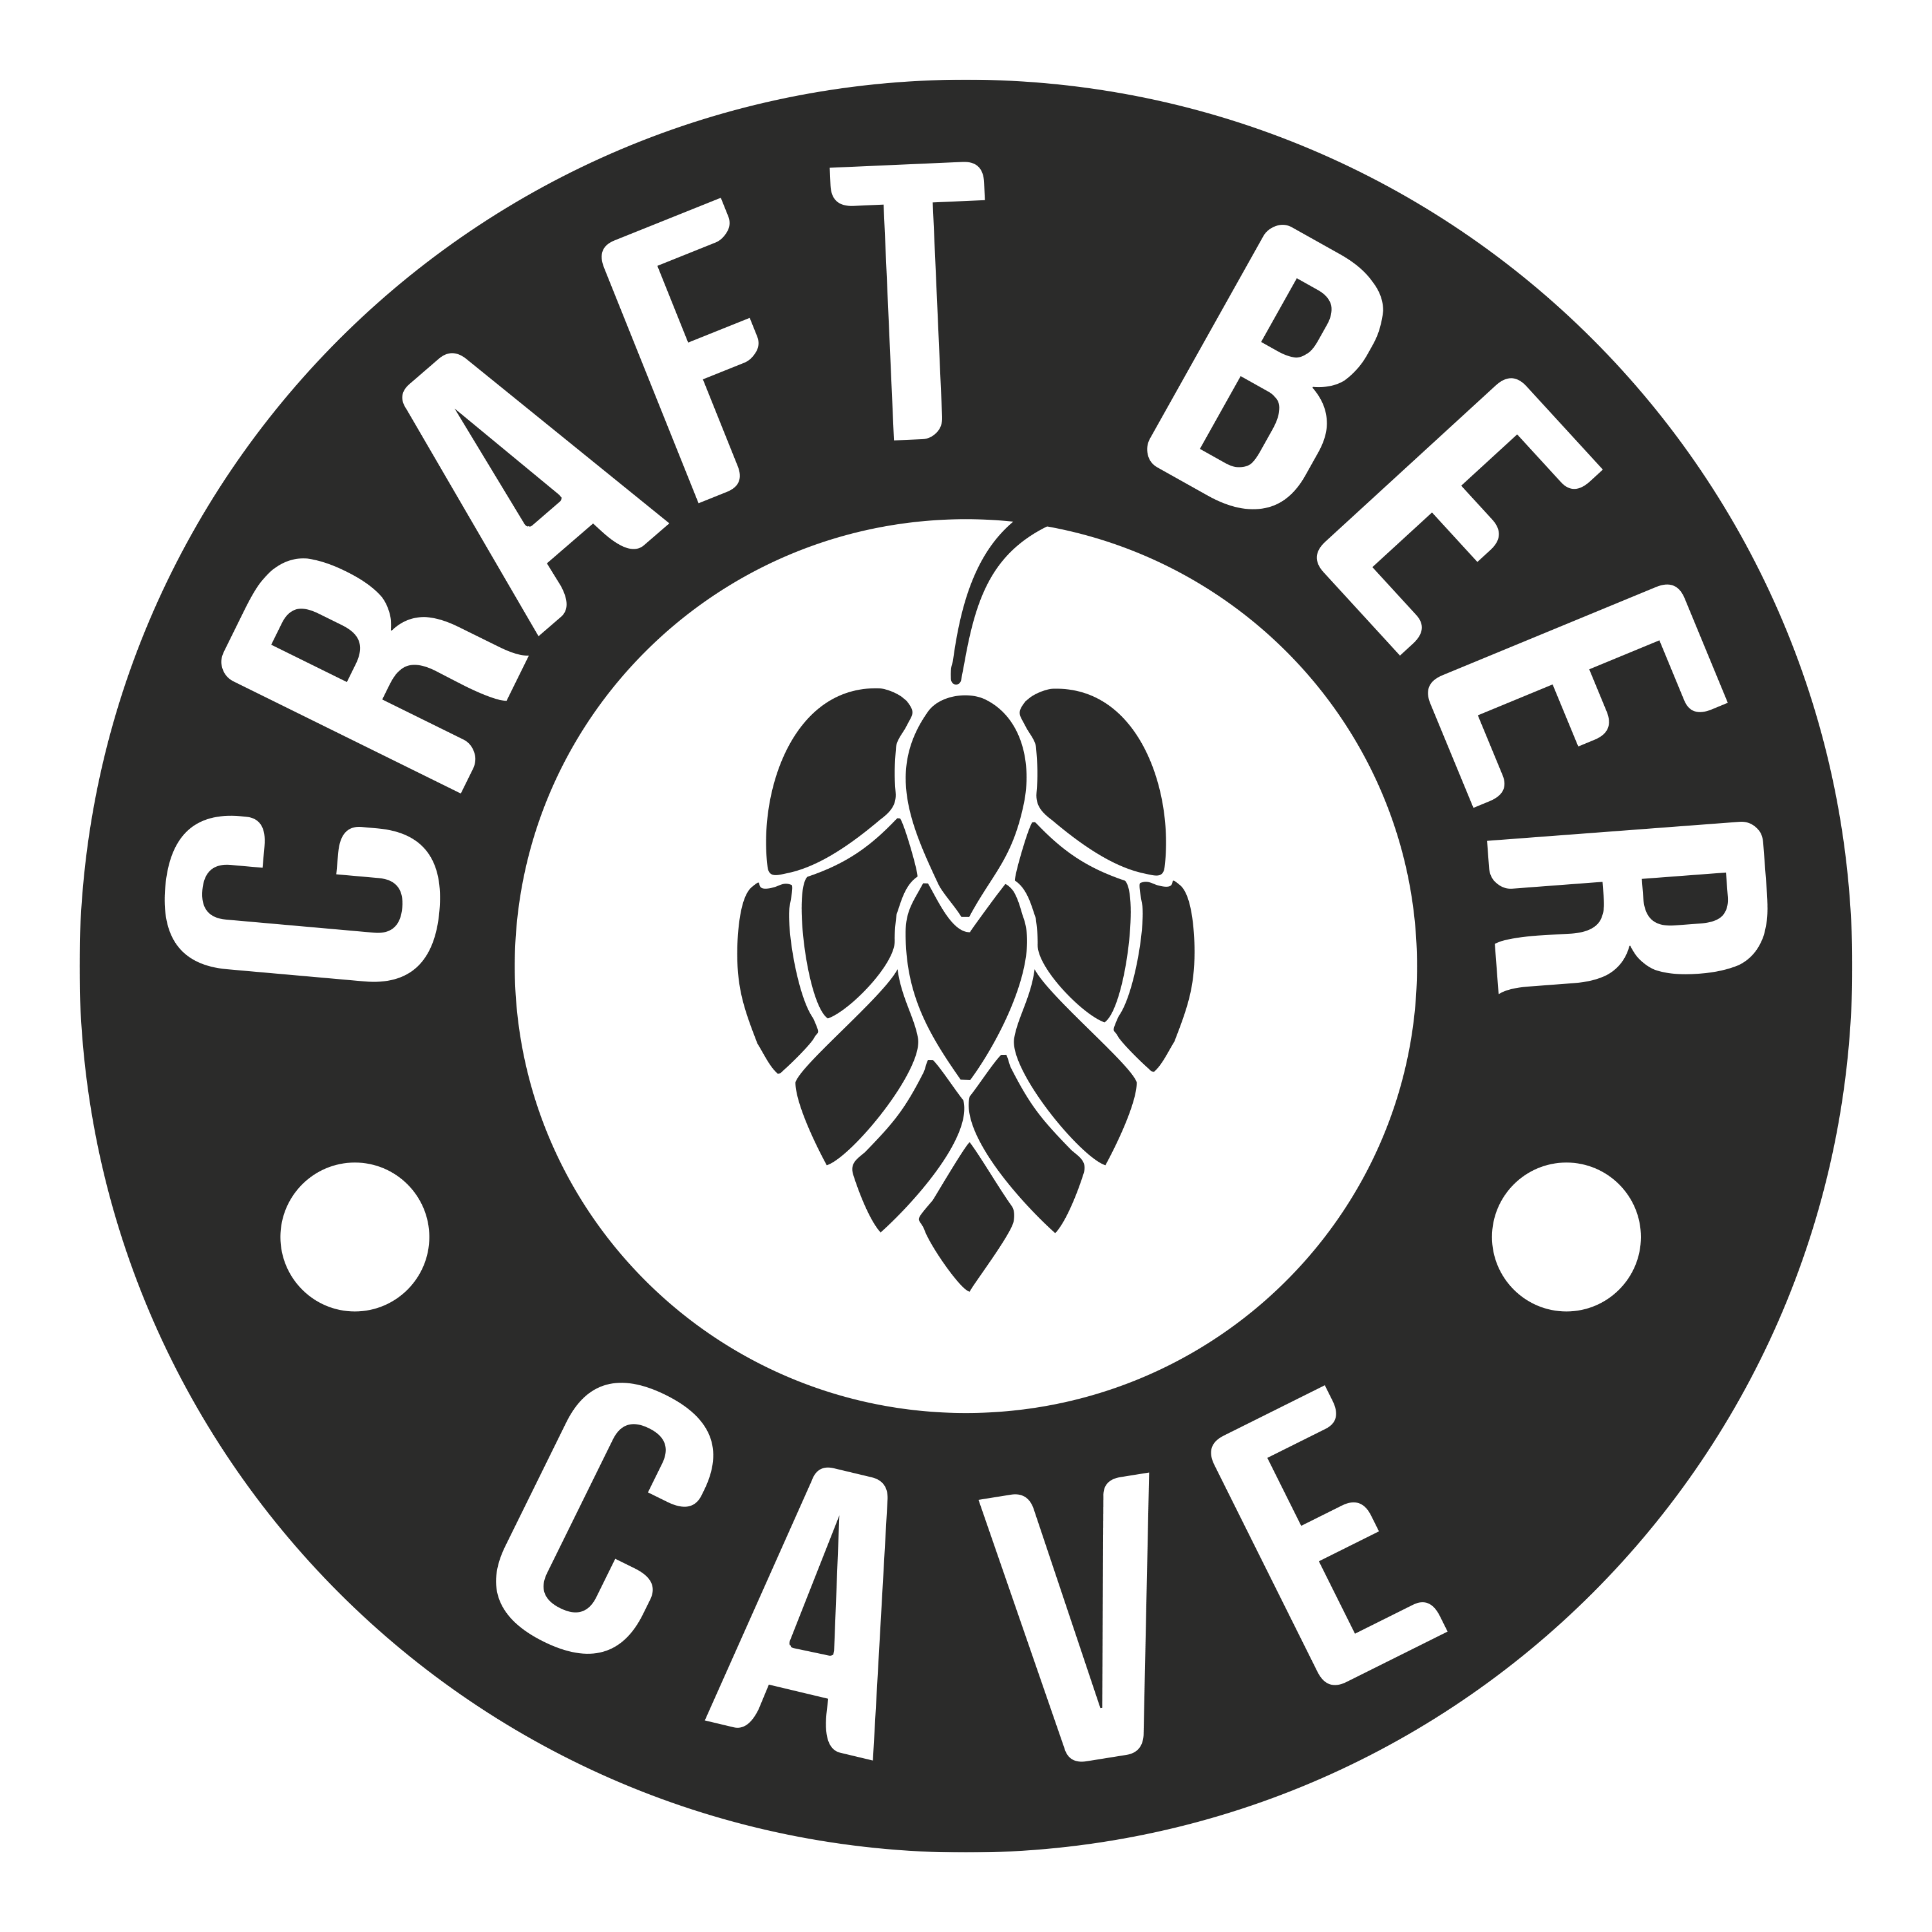 Beer Cave North Wales